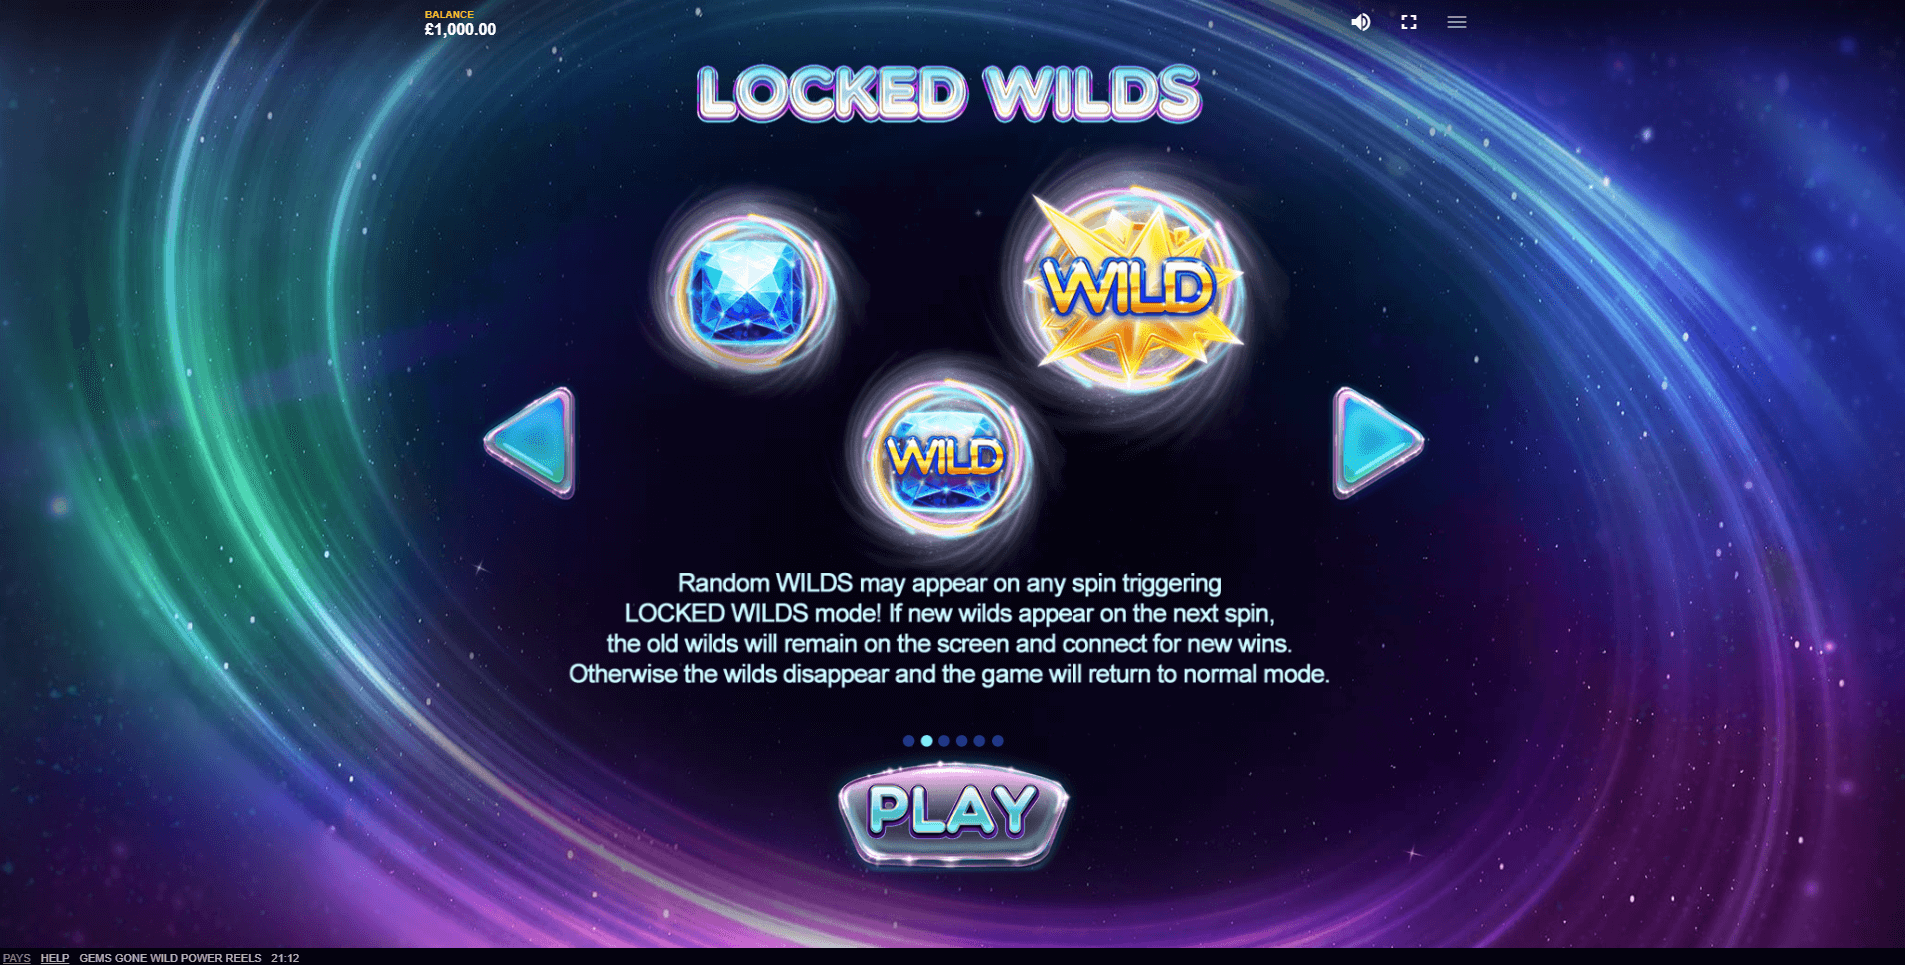 gems gone wild power reels slot machine detail image 0